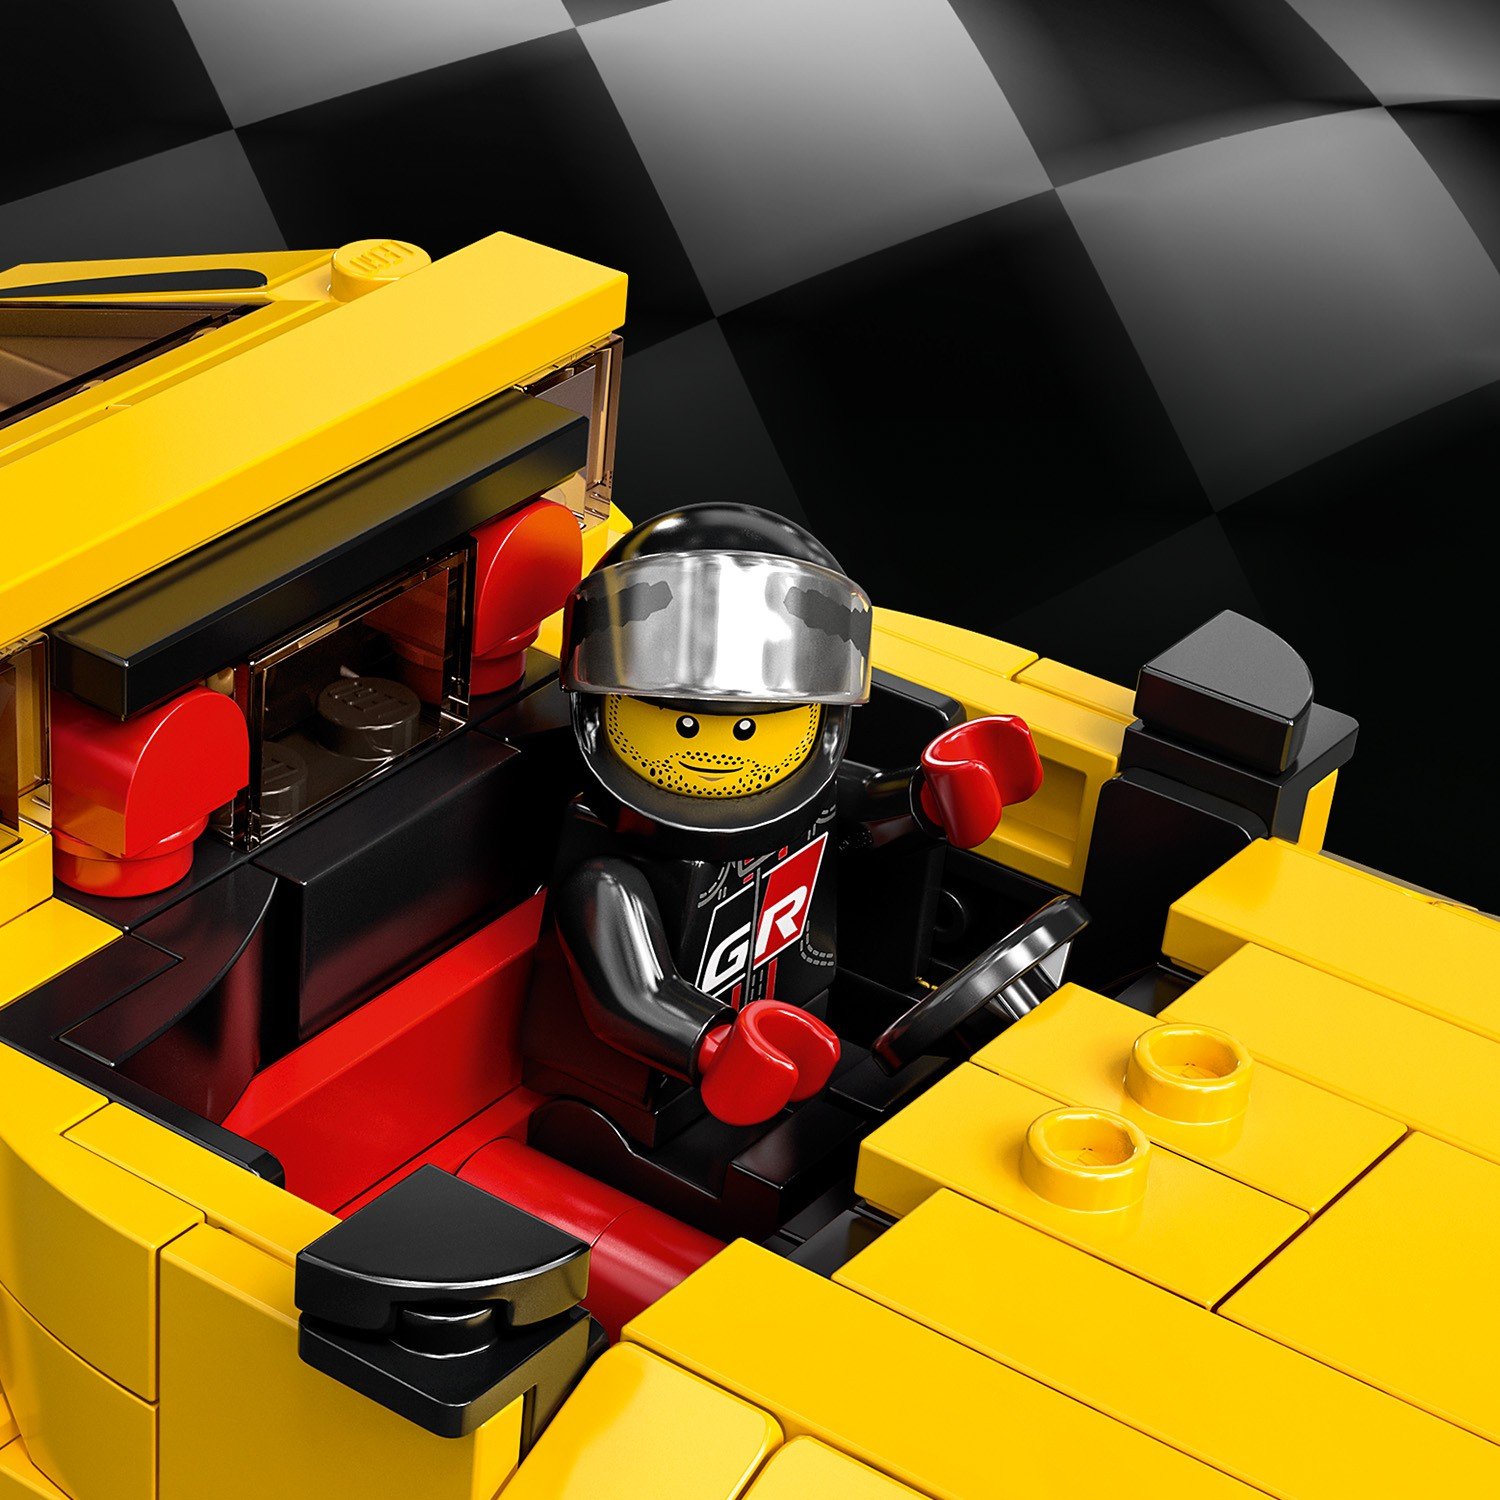 Конструктор LEGO Speed Champions 76901 Toyota GR Supra